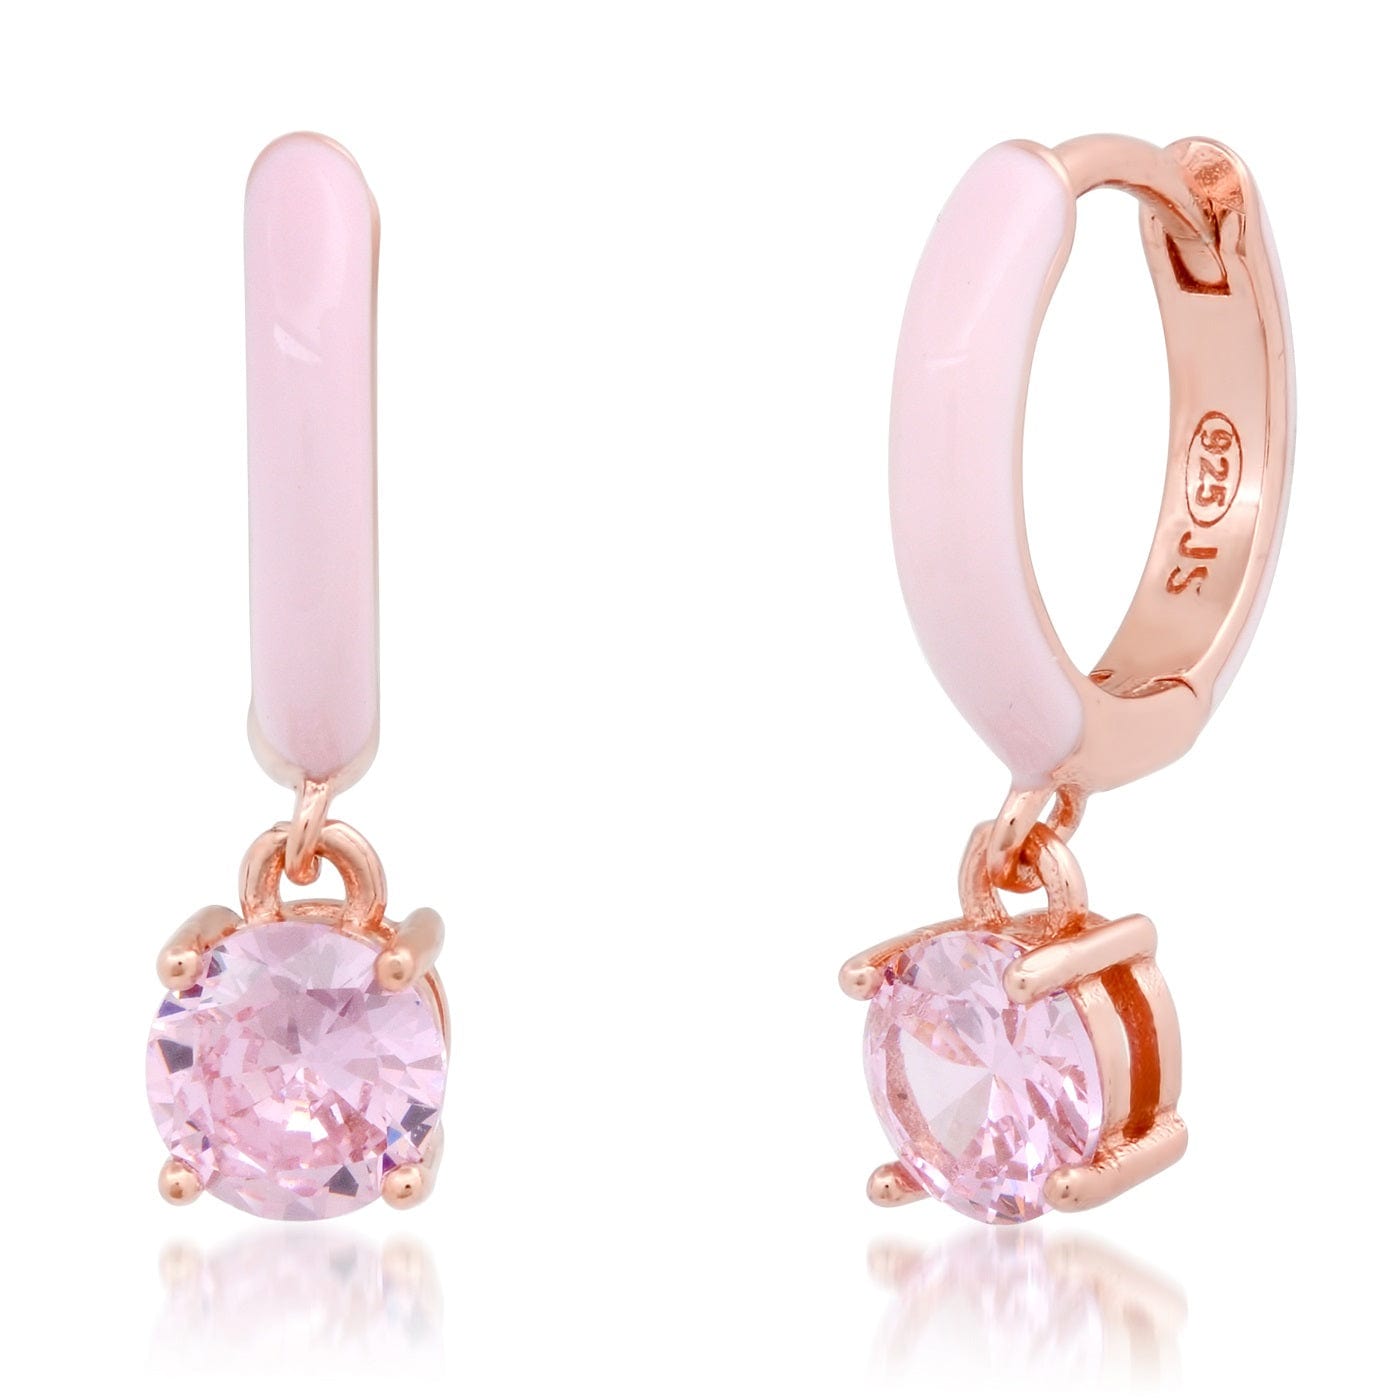 TAI JEWELRY Earrings Pink Enamel Huggie with Colored CZ Charm